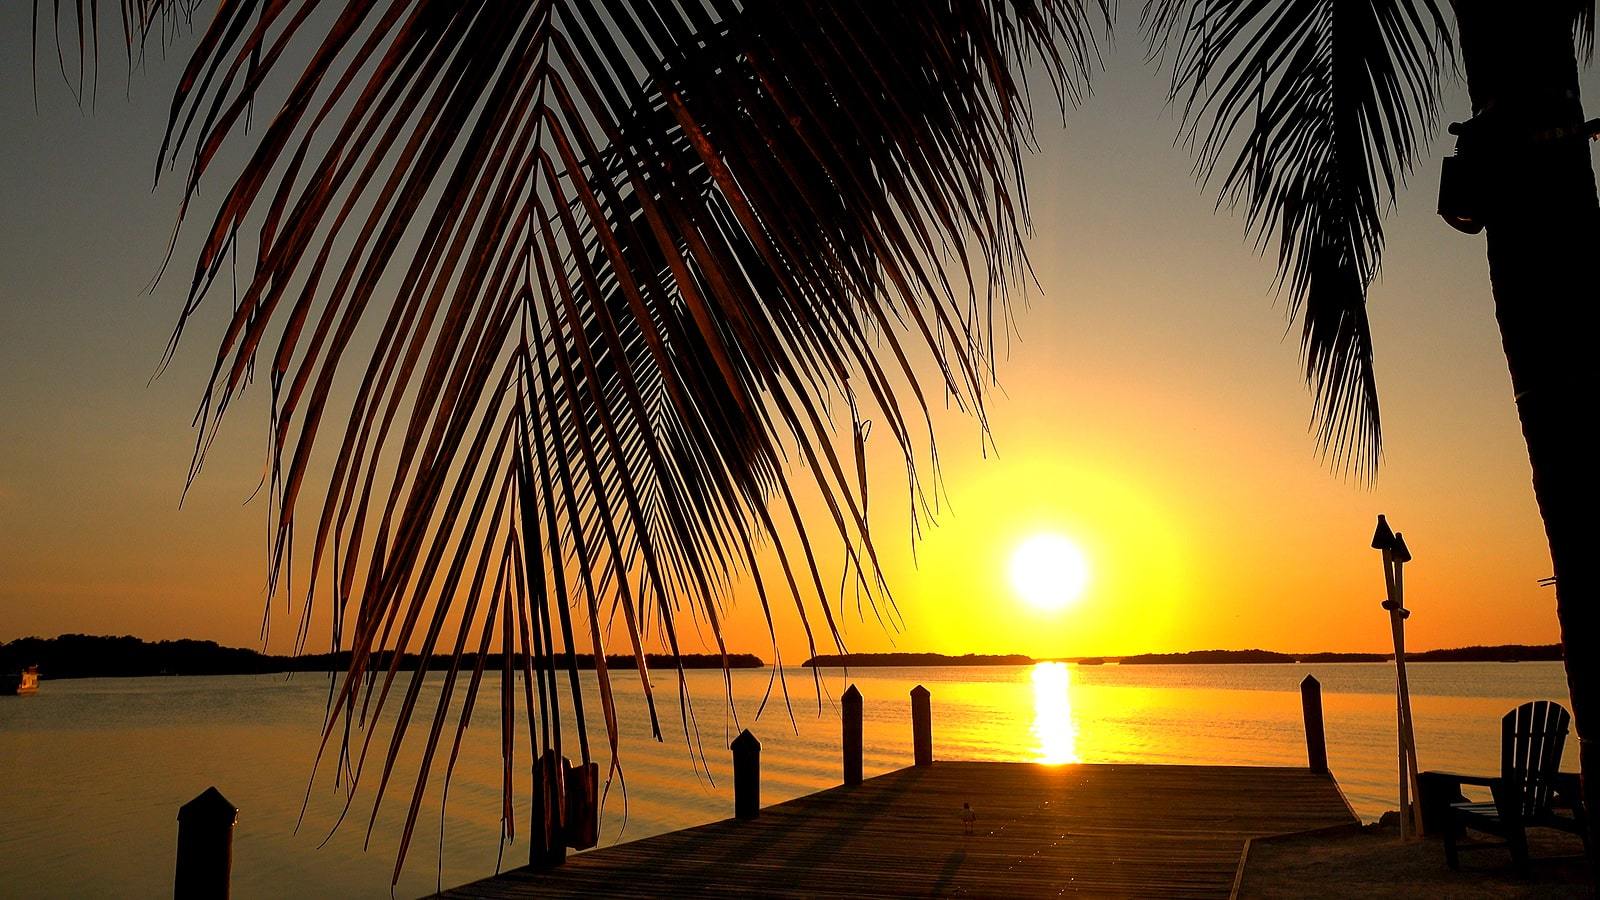 Islamorada sunset on Florida Bay, framed by the silhouette of a palm tree